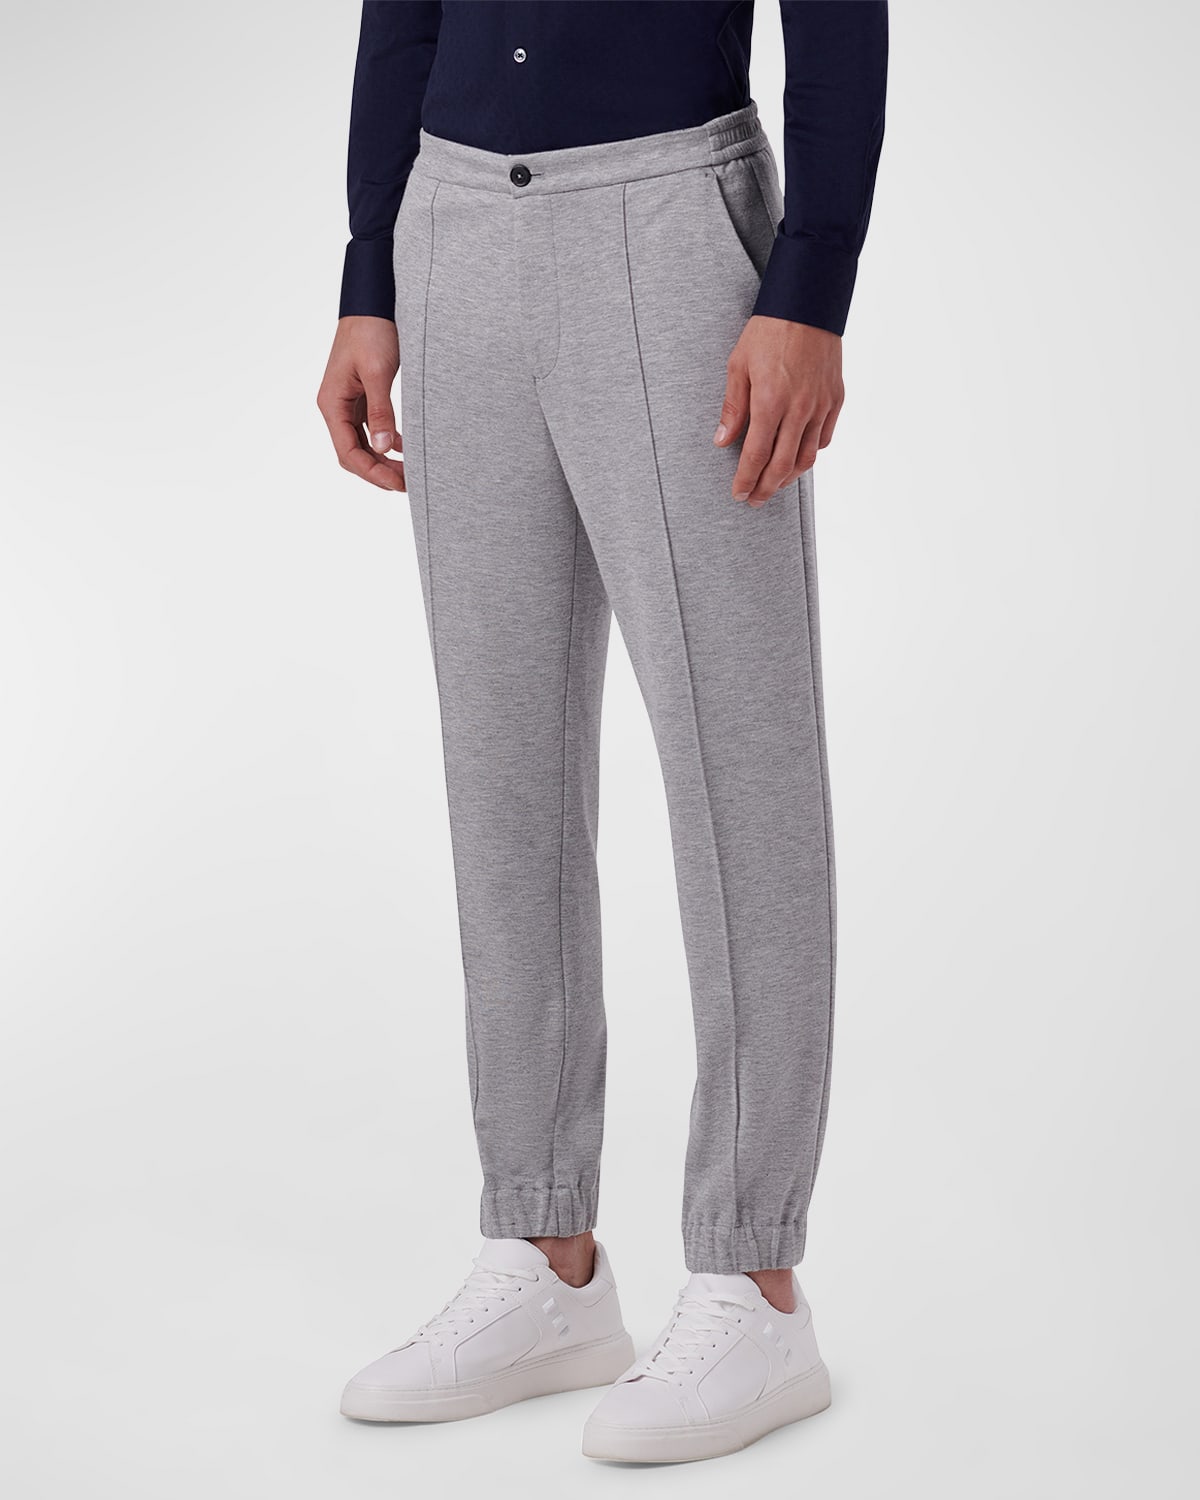 Bugatchi Men's Double-Knit Chino Pants